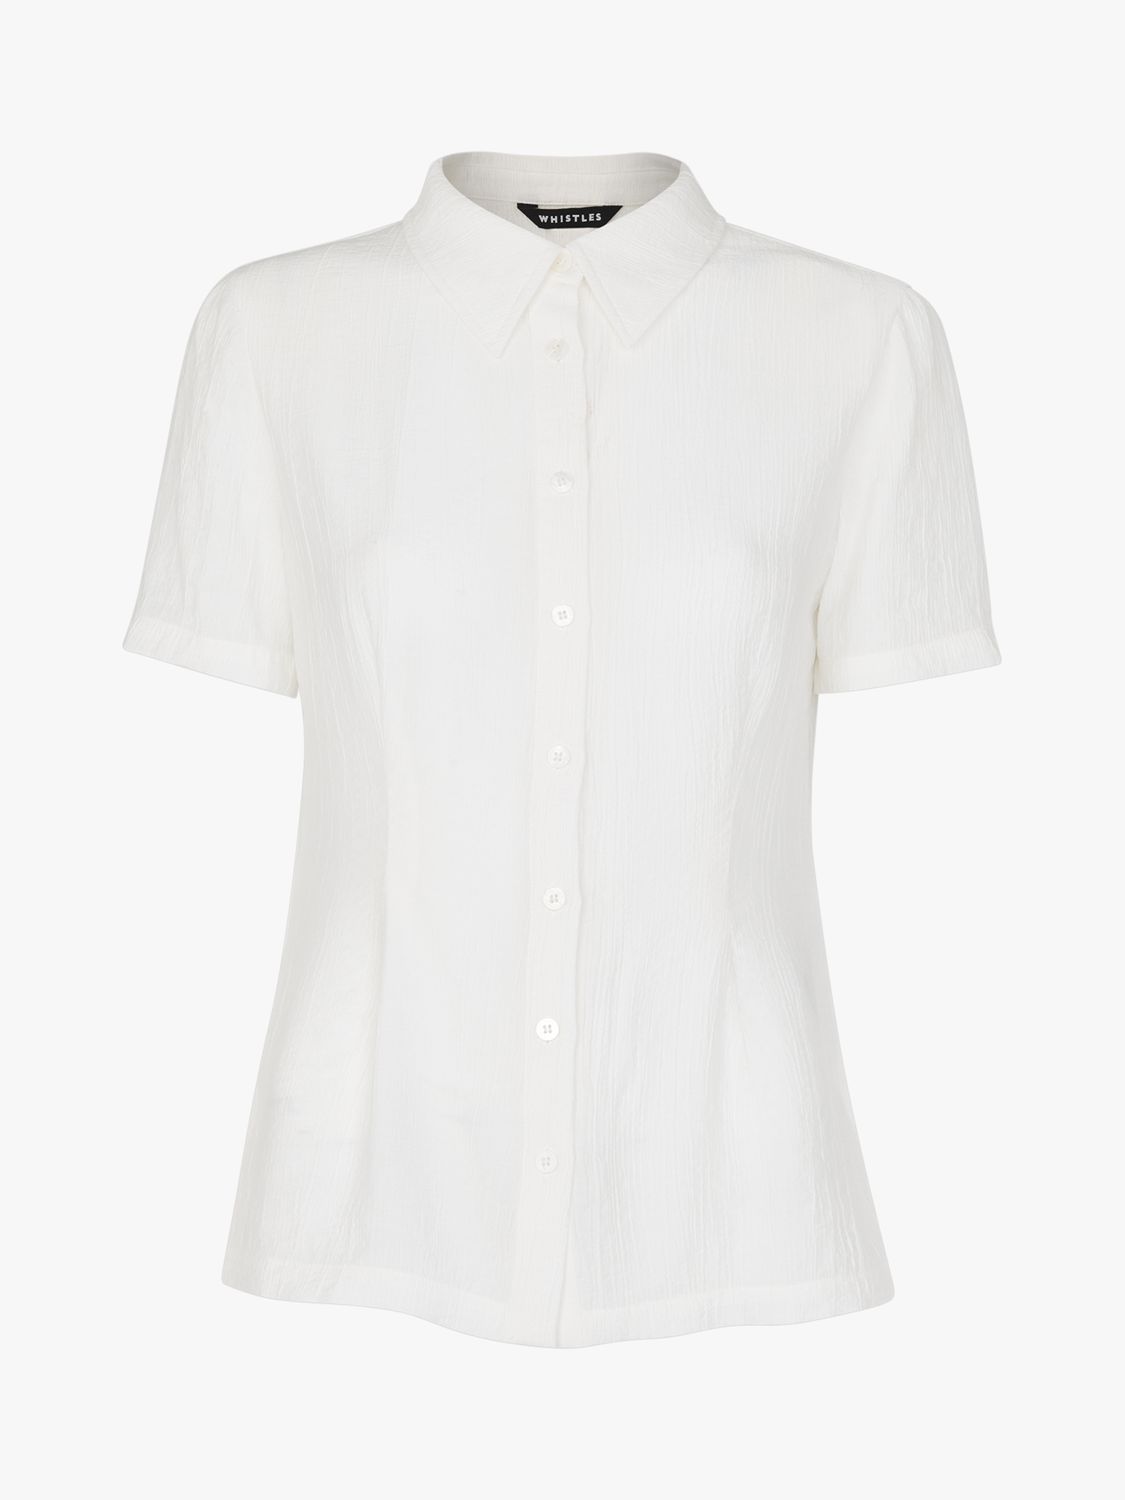 Whistles Square Neck T-Shirt, White at John Lewis & Partners